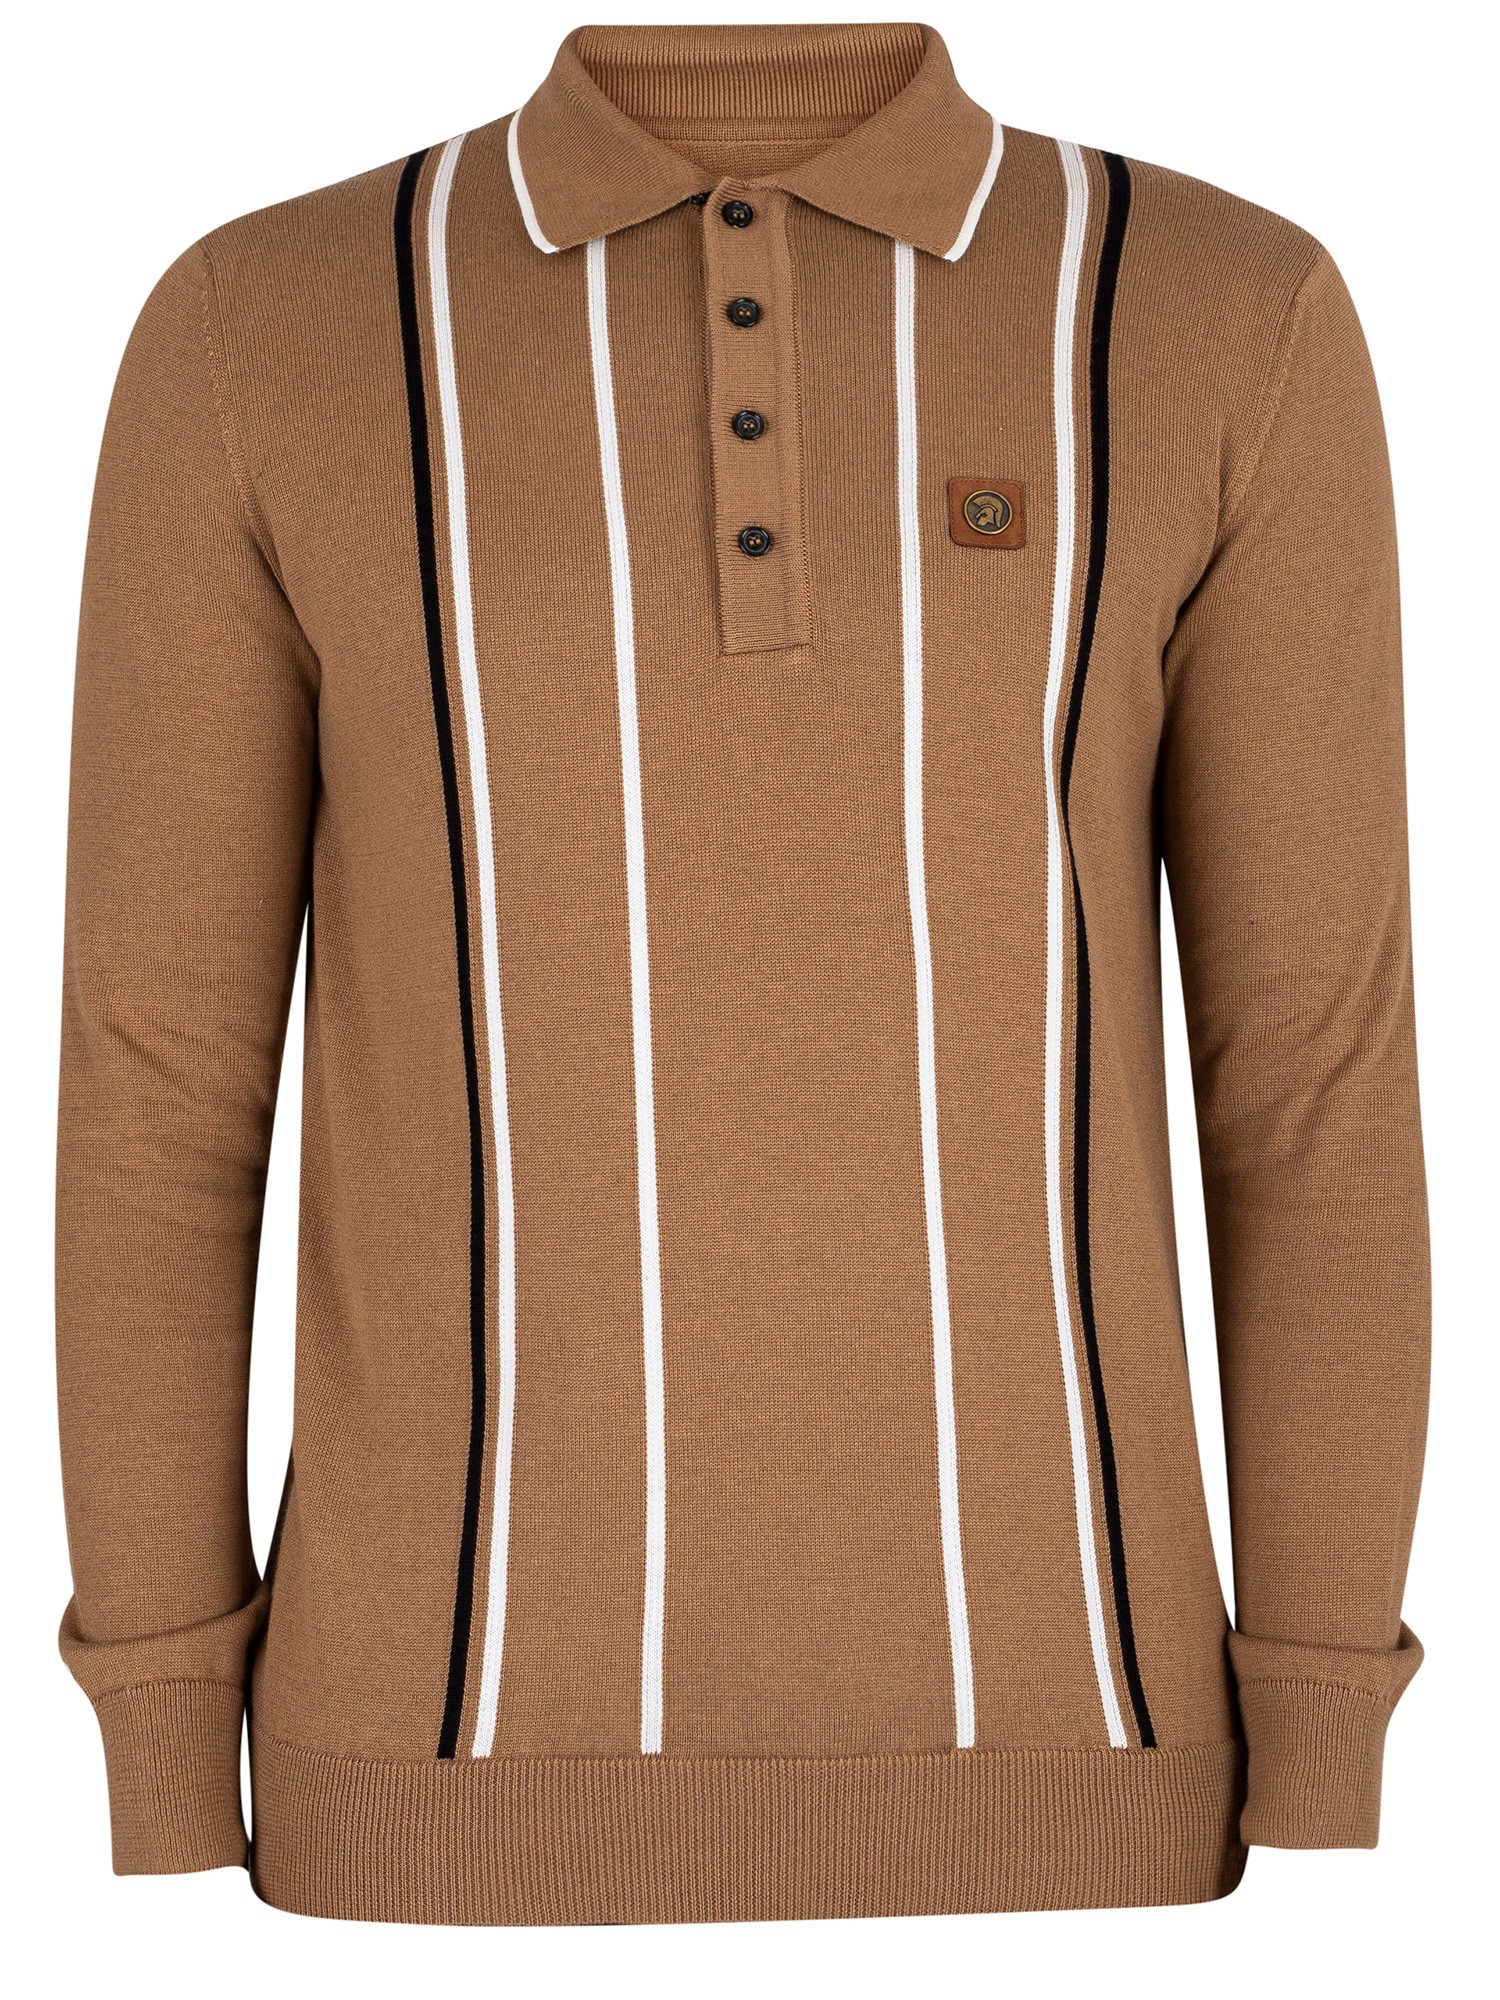 Trojan Long Sleeve Striped Polo Shirt TR/8712B Camel